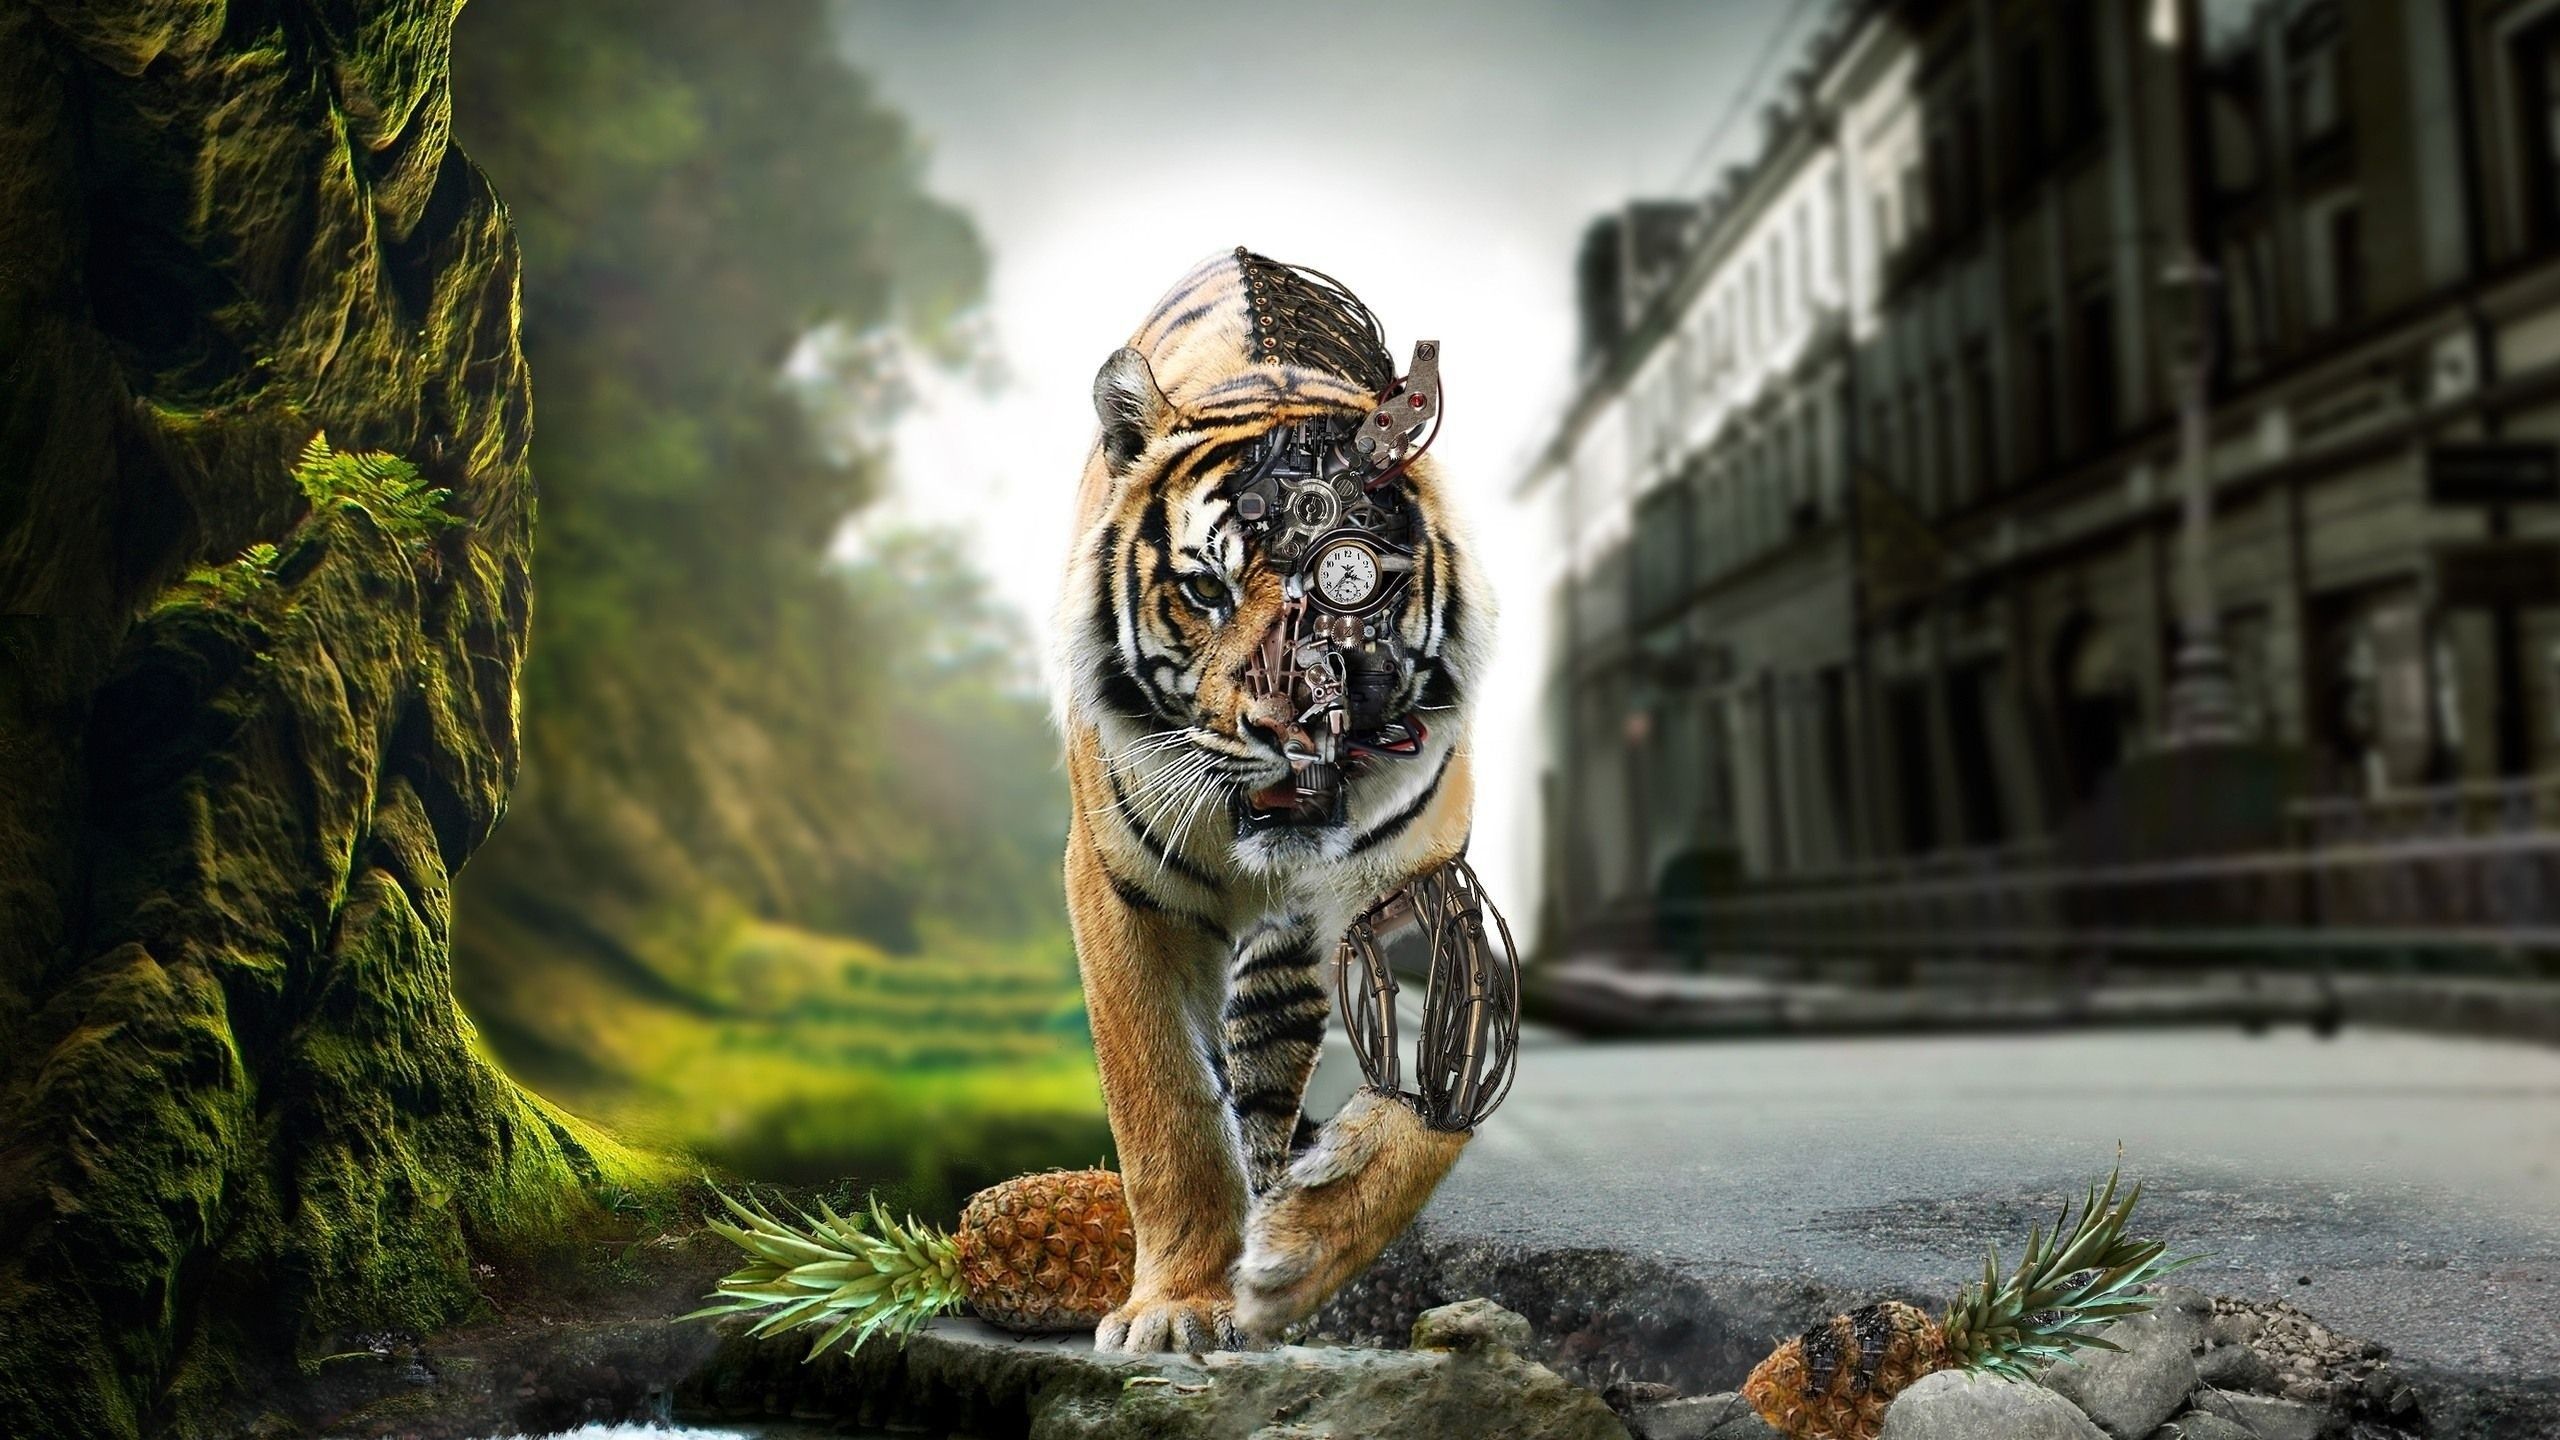 animals tigers 2560x1440 wallpaper High Quality Wallpaper, High Definition Wallpaper